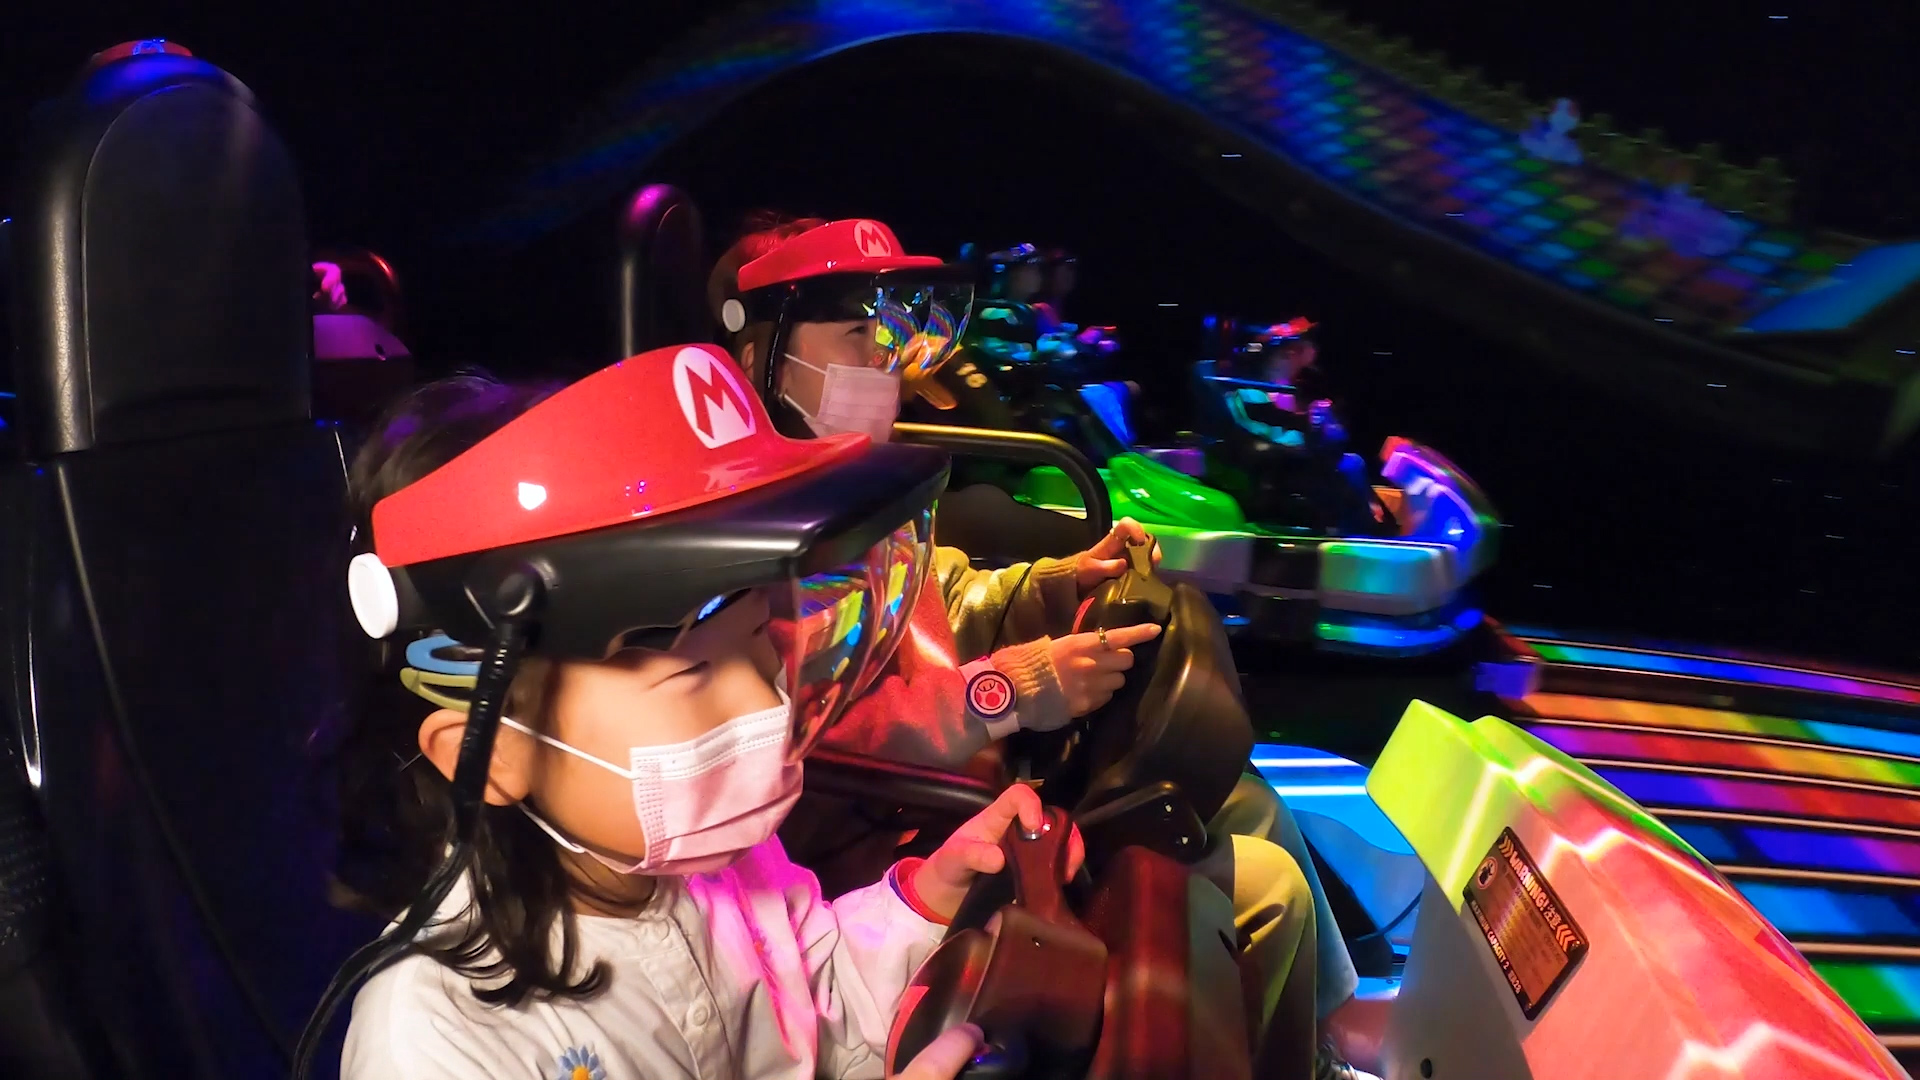 Ride Review: Mario Kart in Super Nintendo World - Disney Tourist Blog